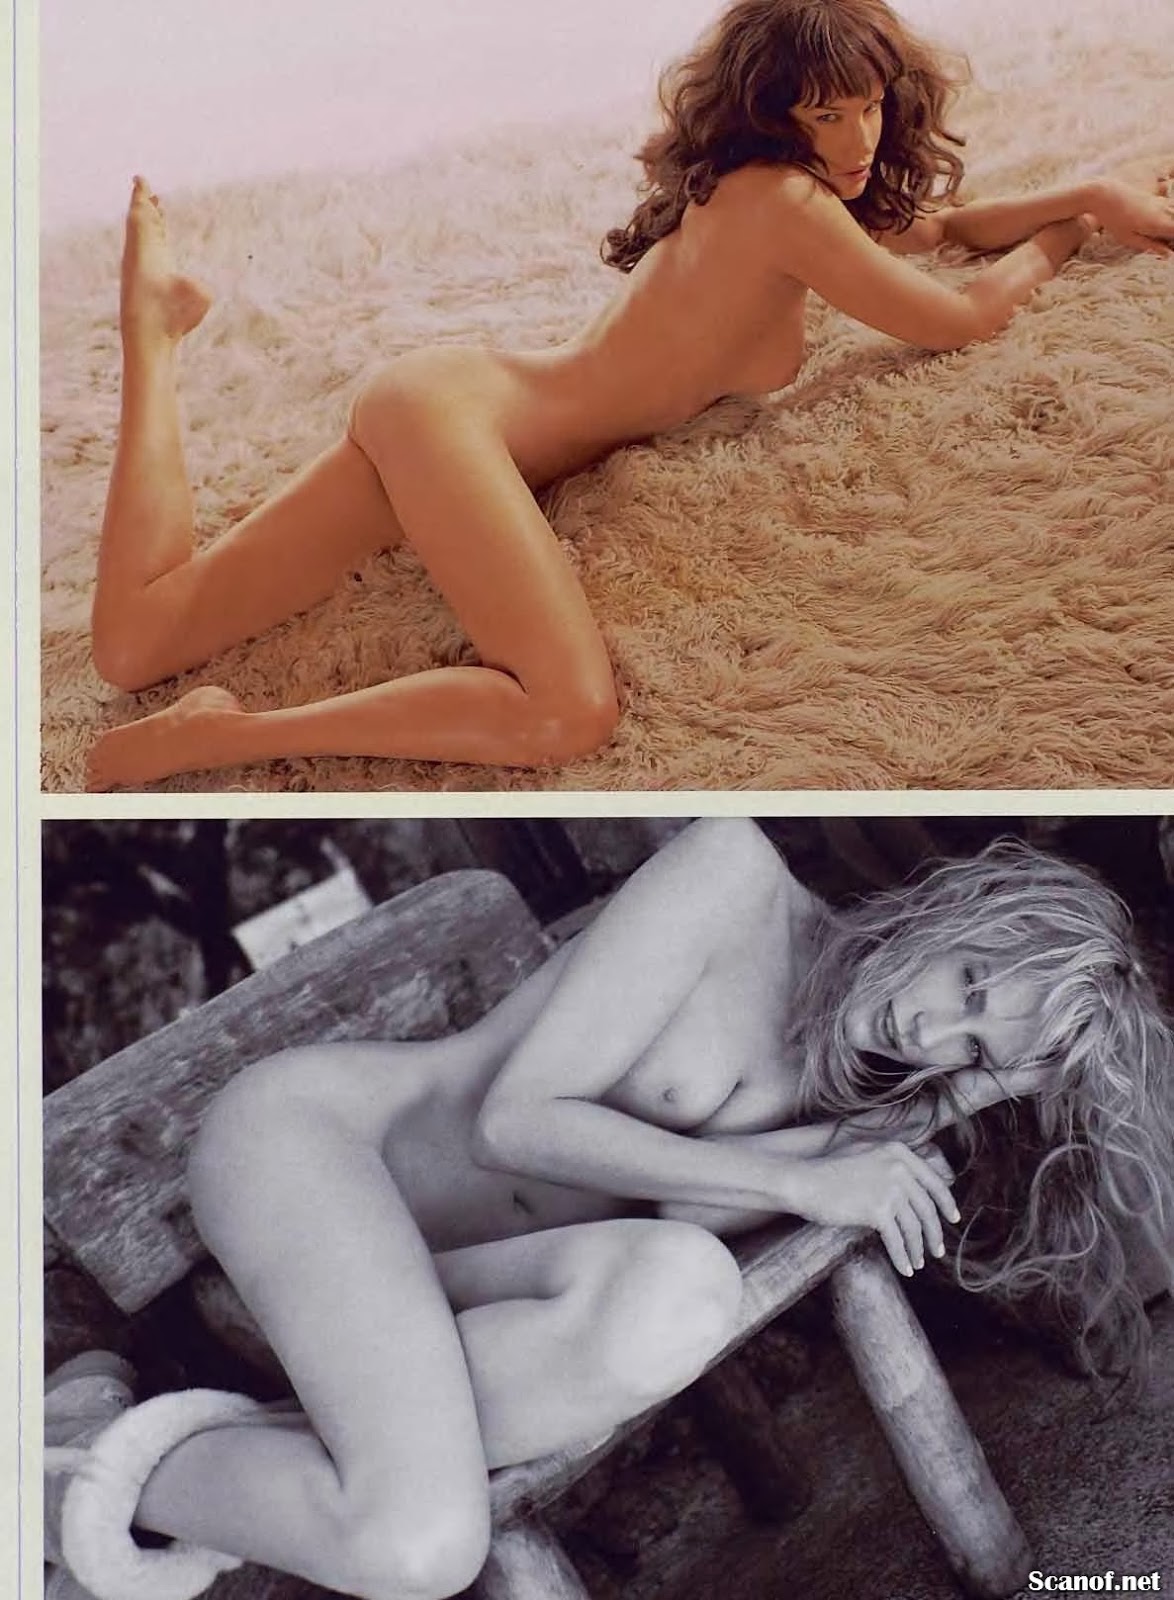 Daryl hannah nude playboy - 🧡 Daryl Hannah Nude Photo Collection - Fappen....